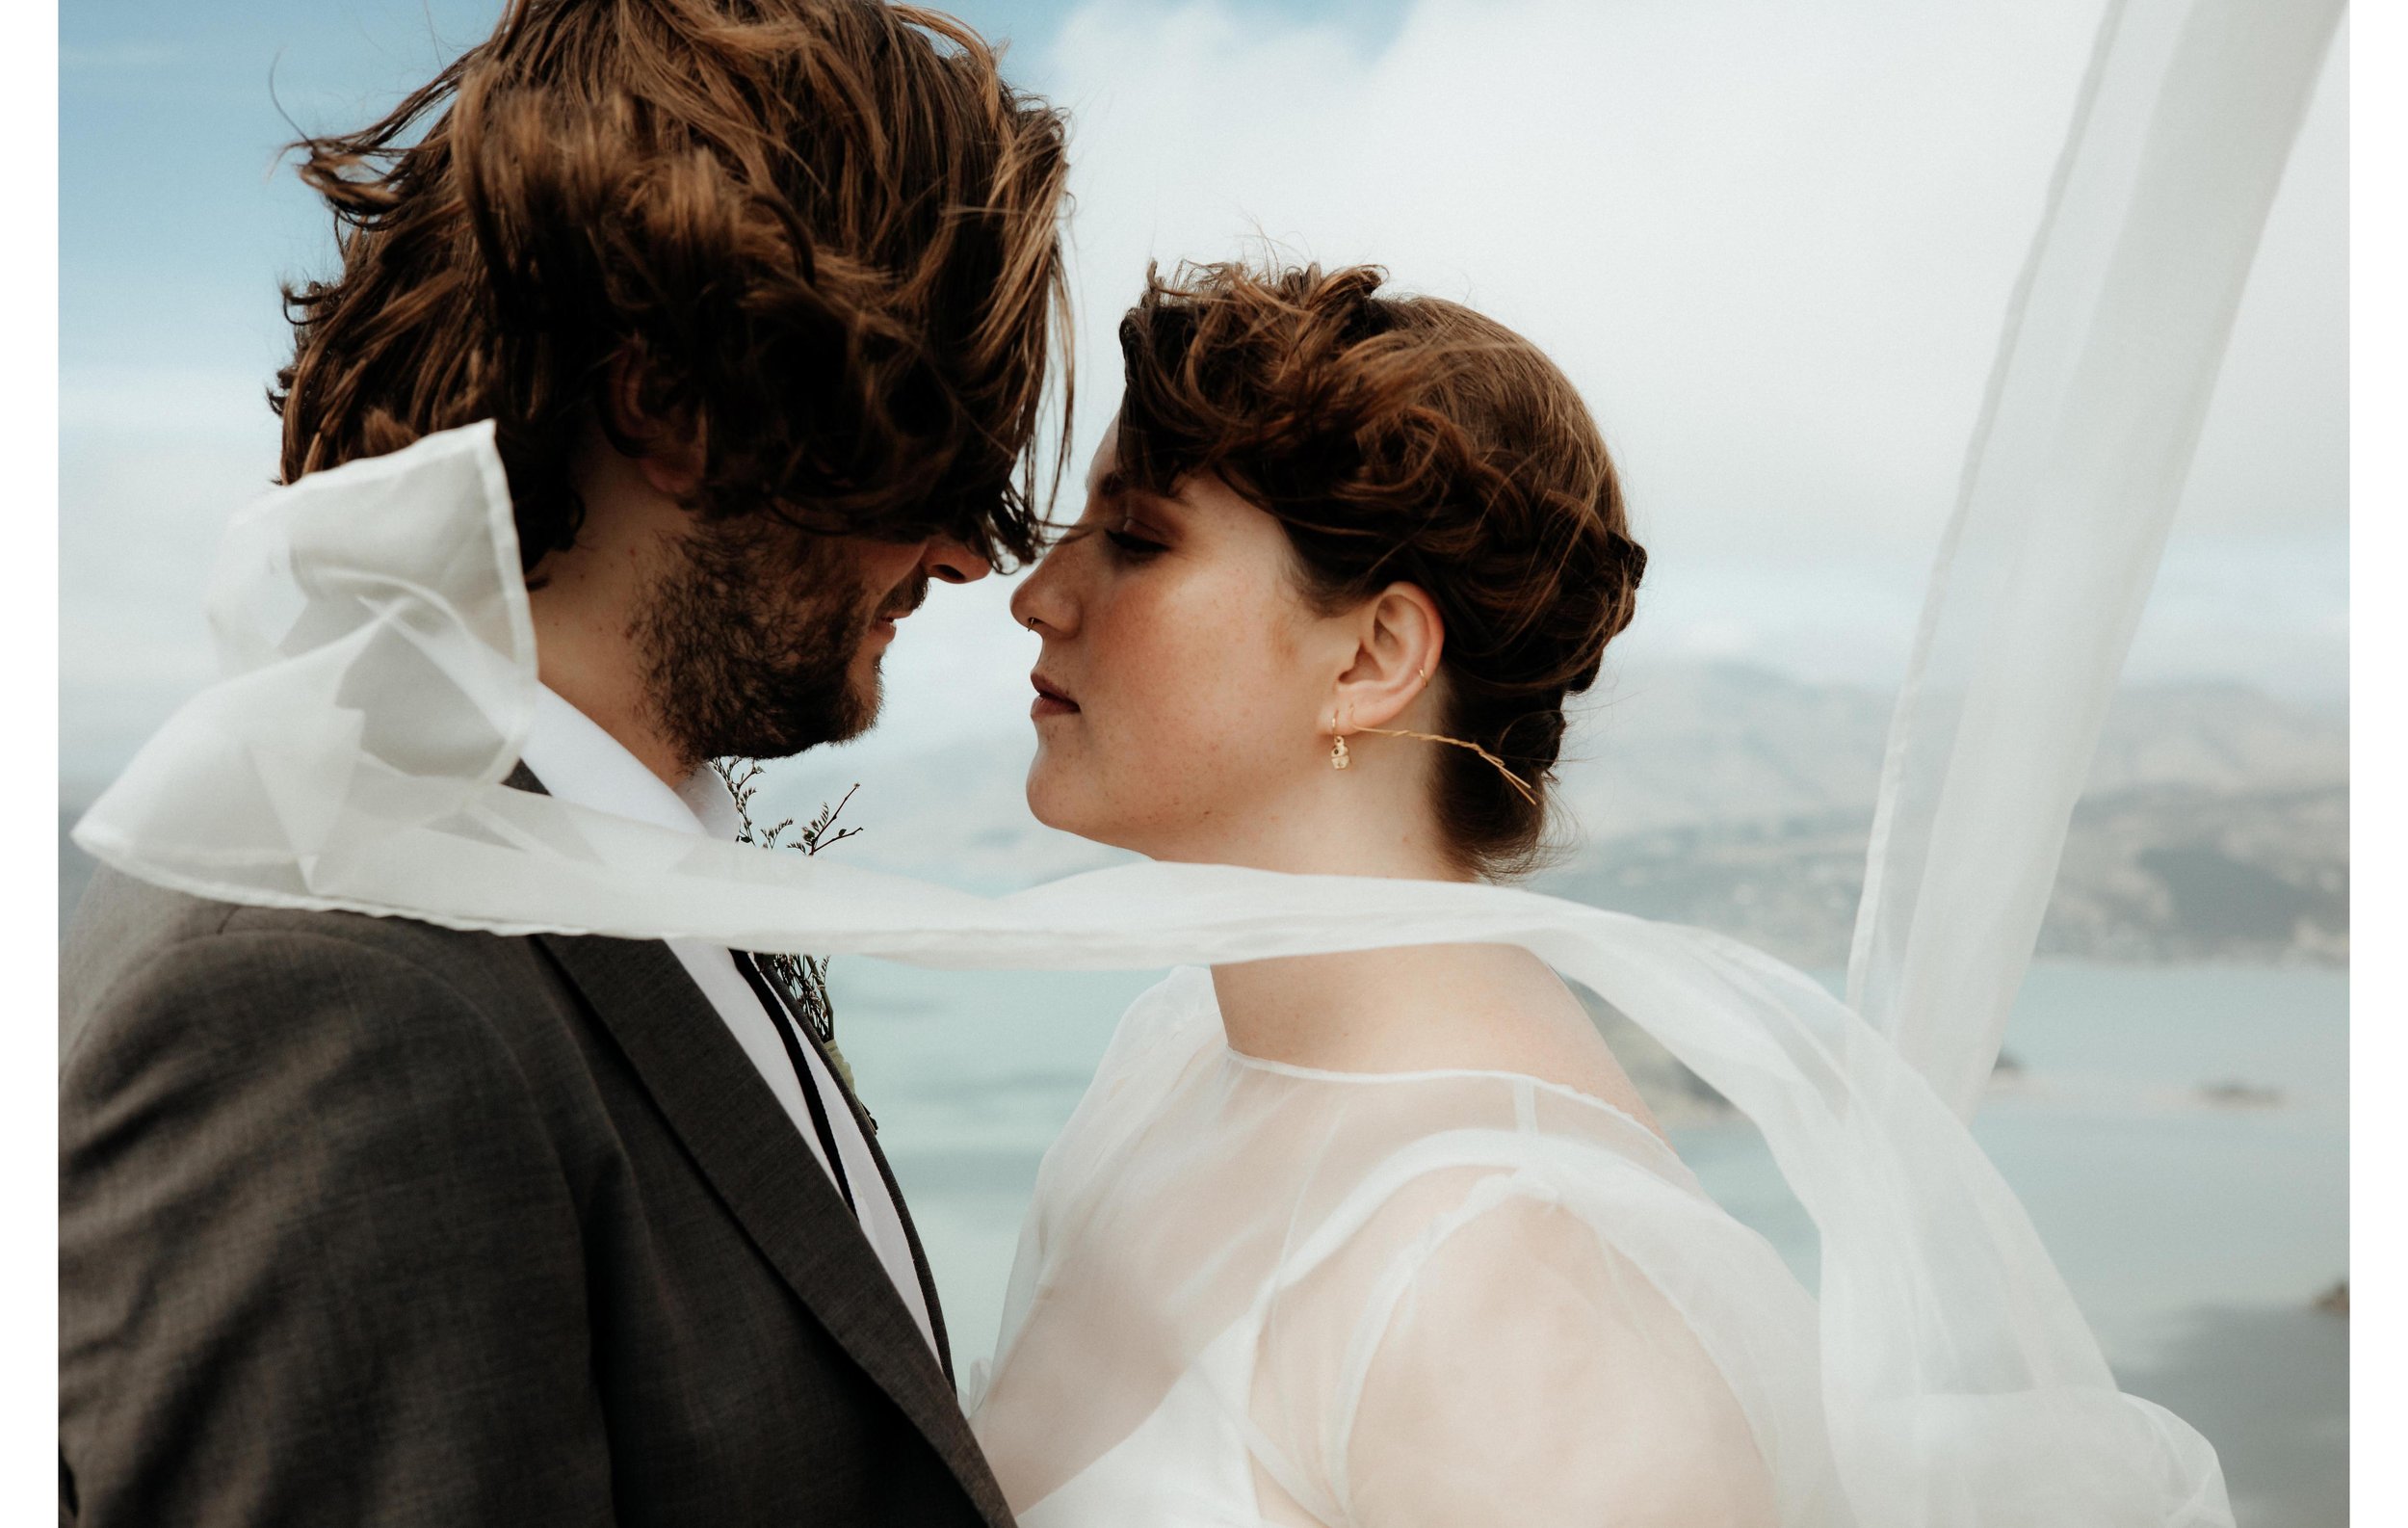 KJP | Wedding photography Christchurch 1.jpg